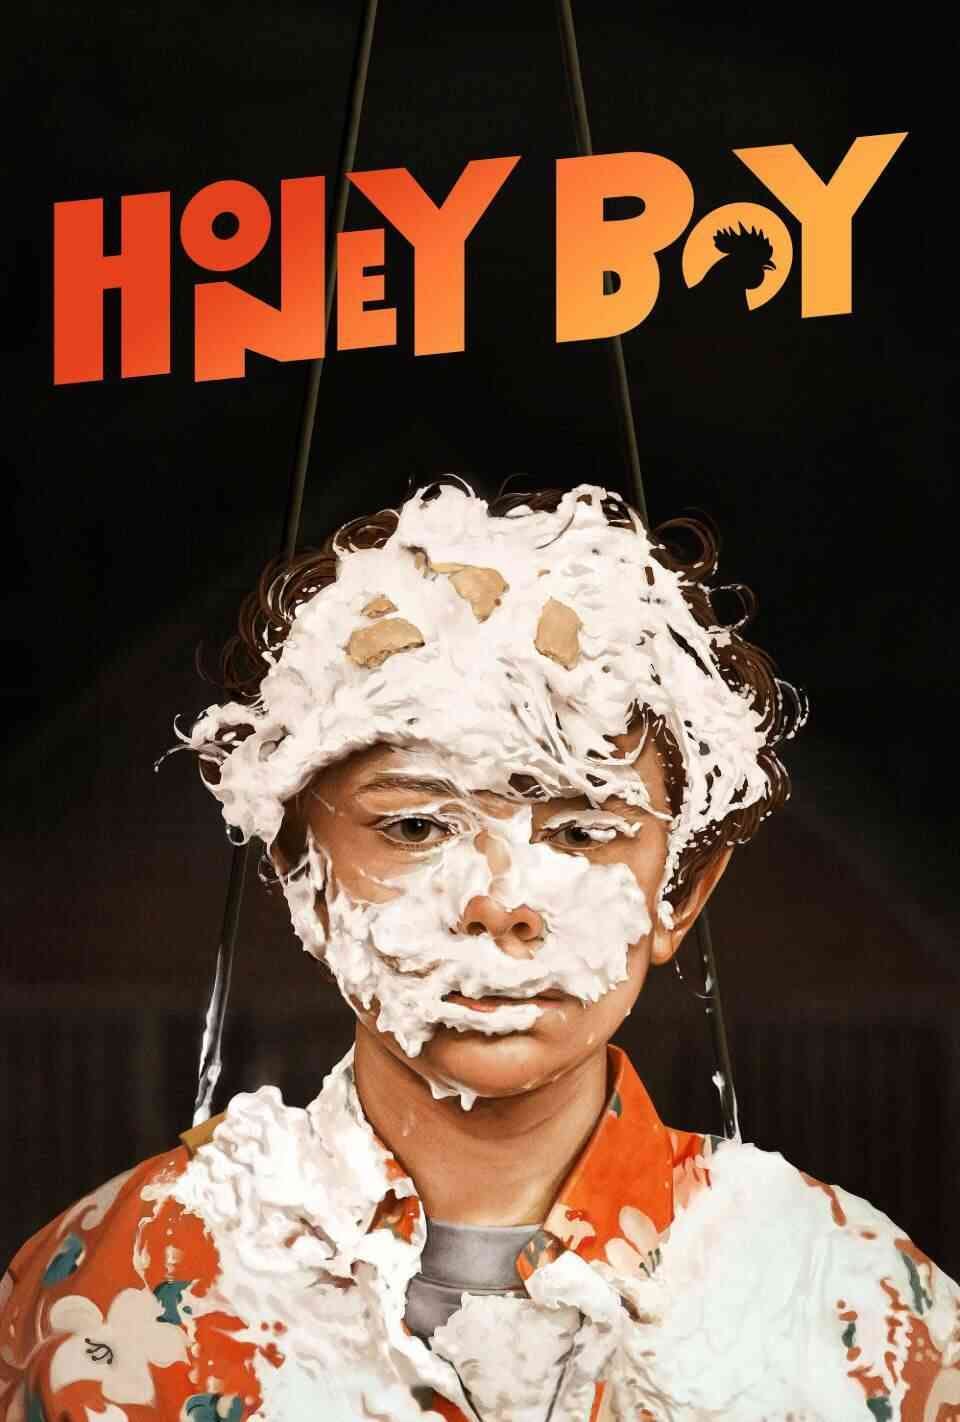 Read Honey Boy screenplay (poster)